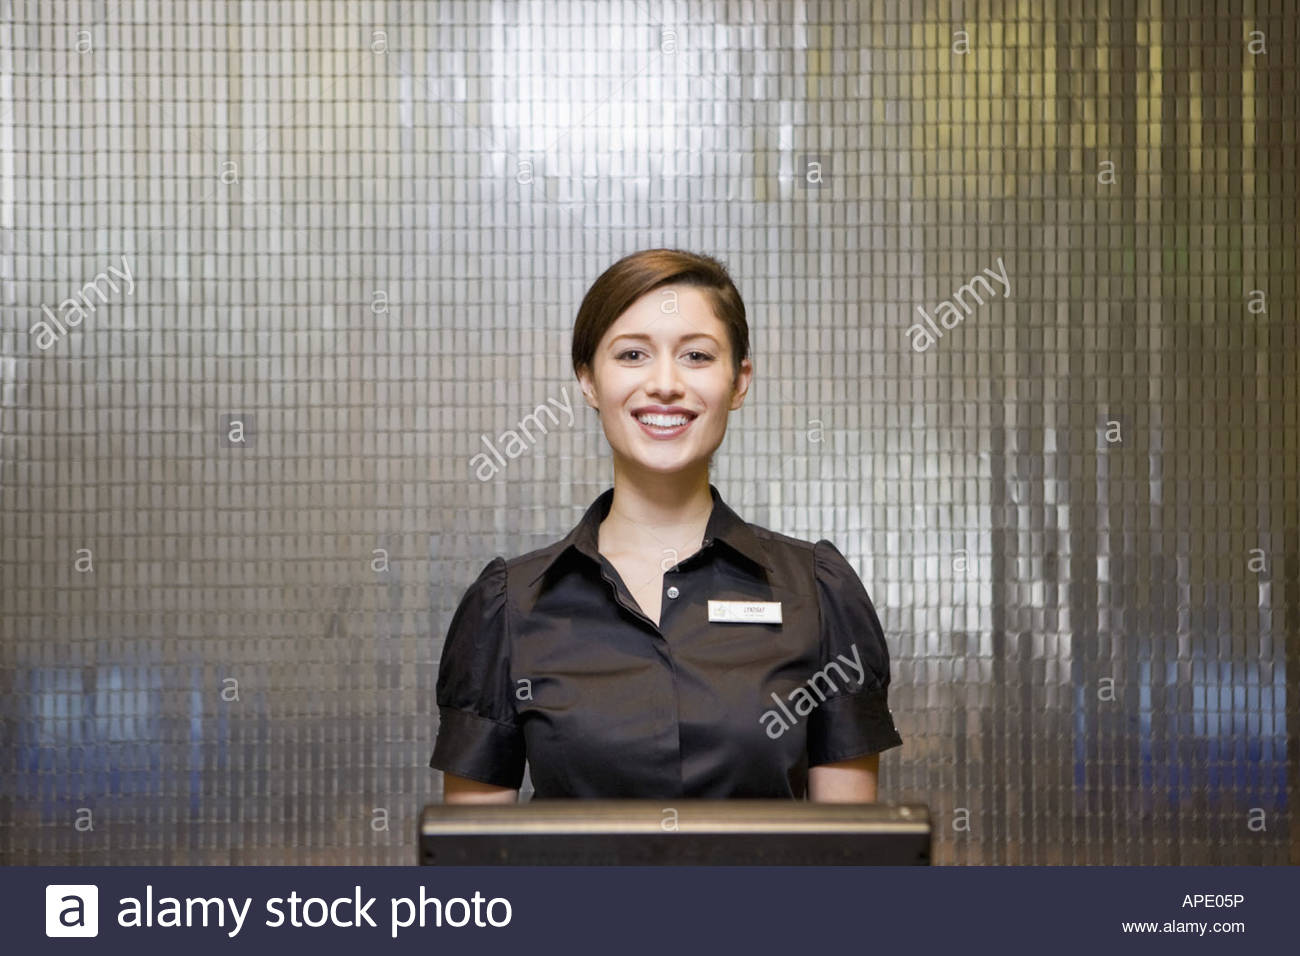 Female Hotel Front Desk Clerk Stock Photo 15761601 Alamy